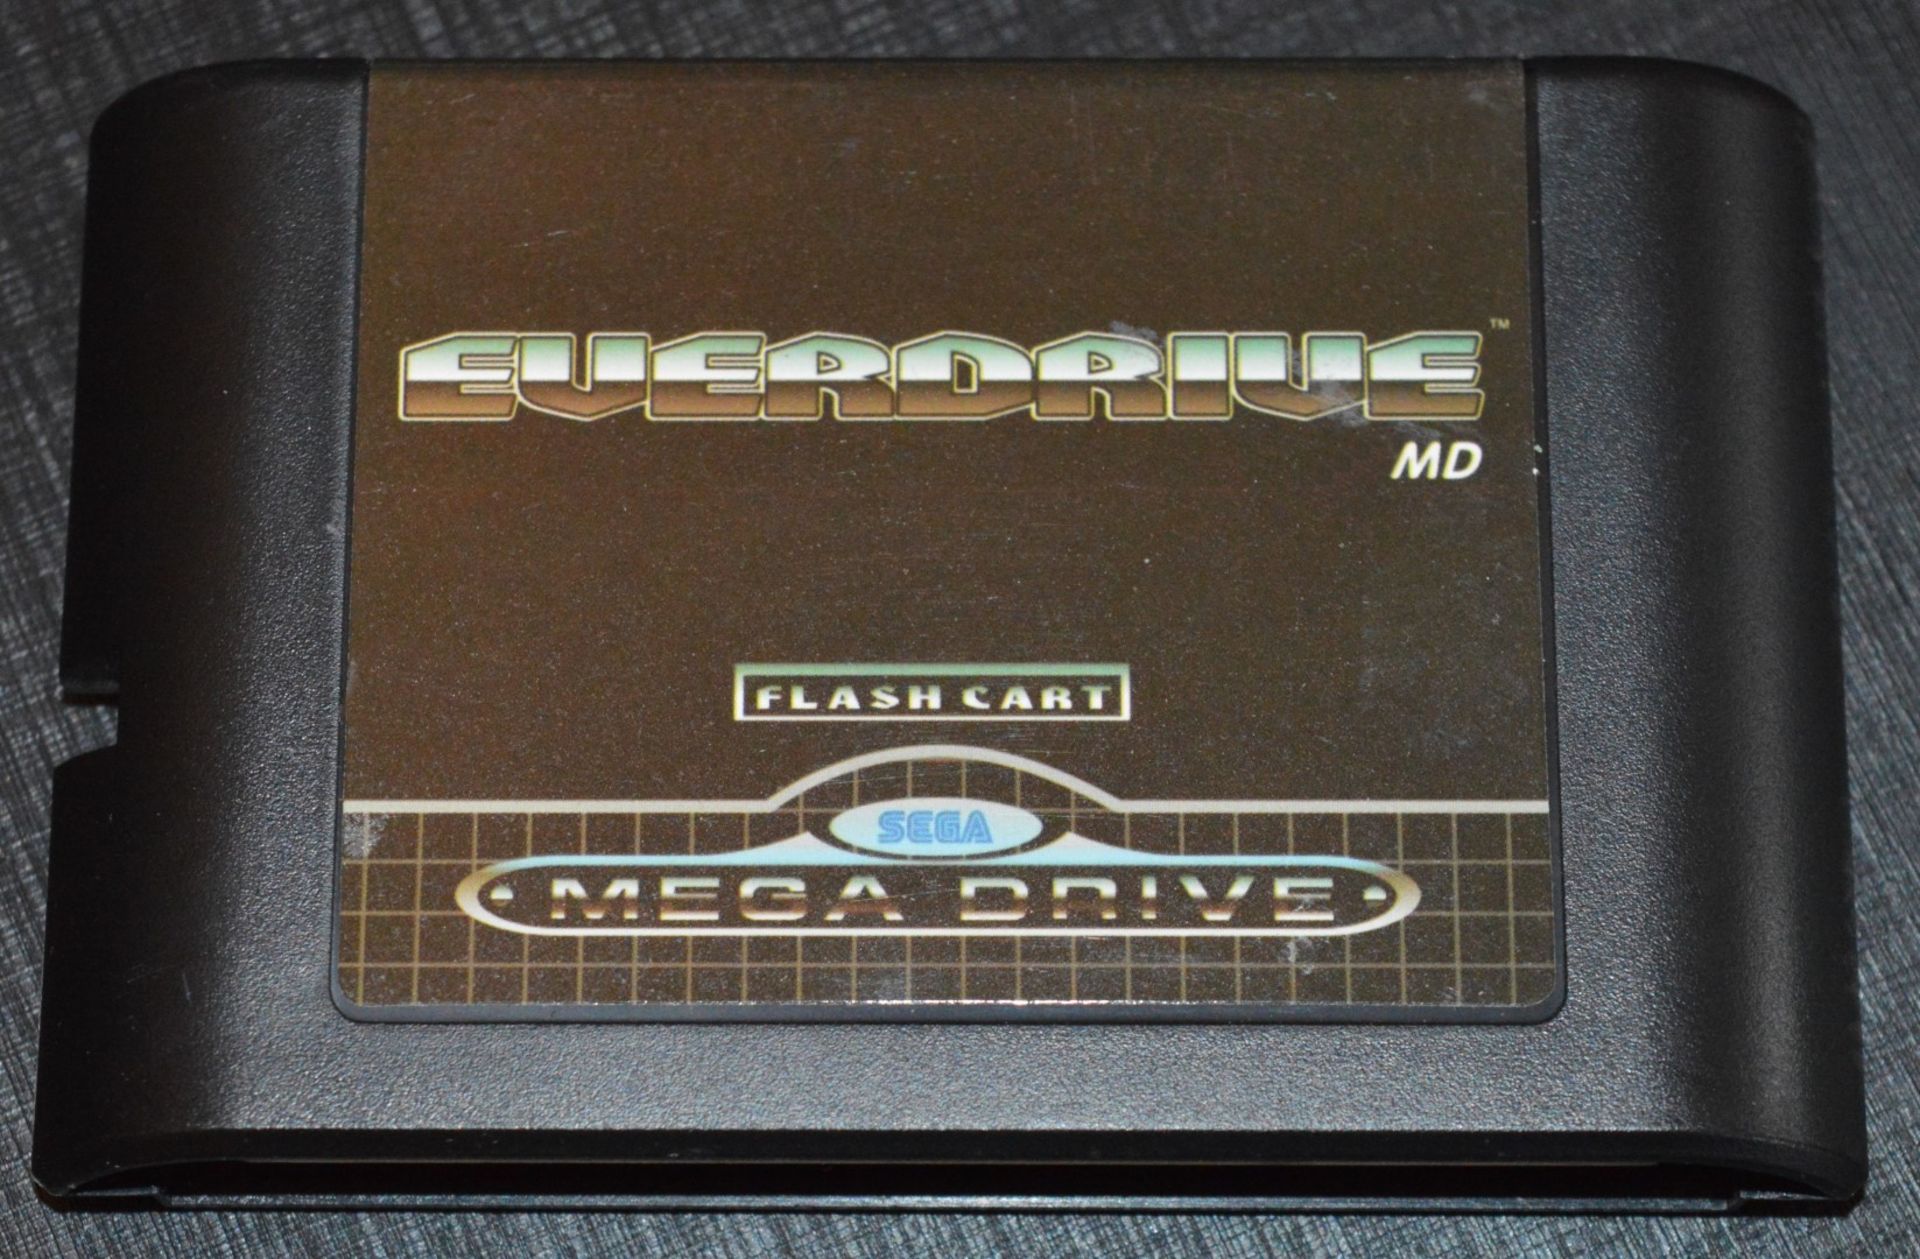 1 x Sega Mega Drive Original Games Console With Everdrive Multi Game Cartridge & 2 x Controllers - Image 2 of 5